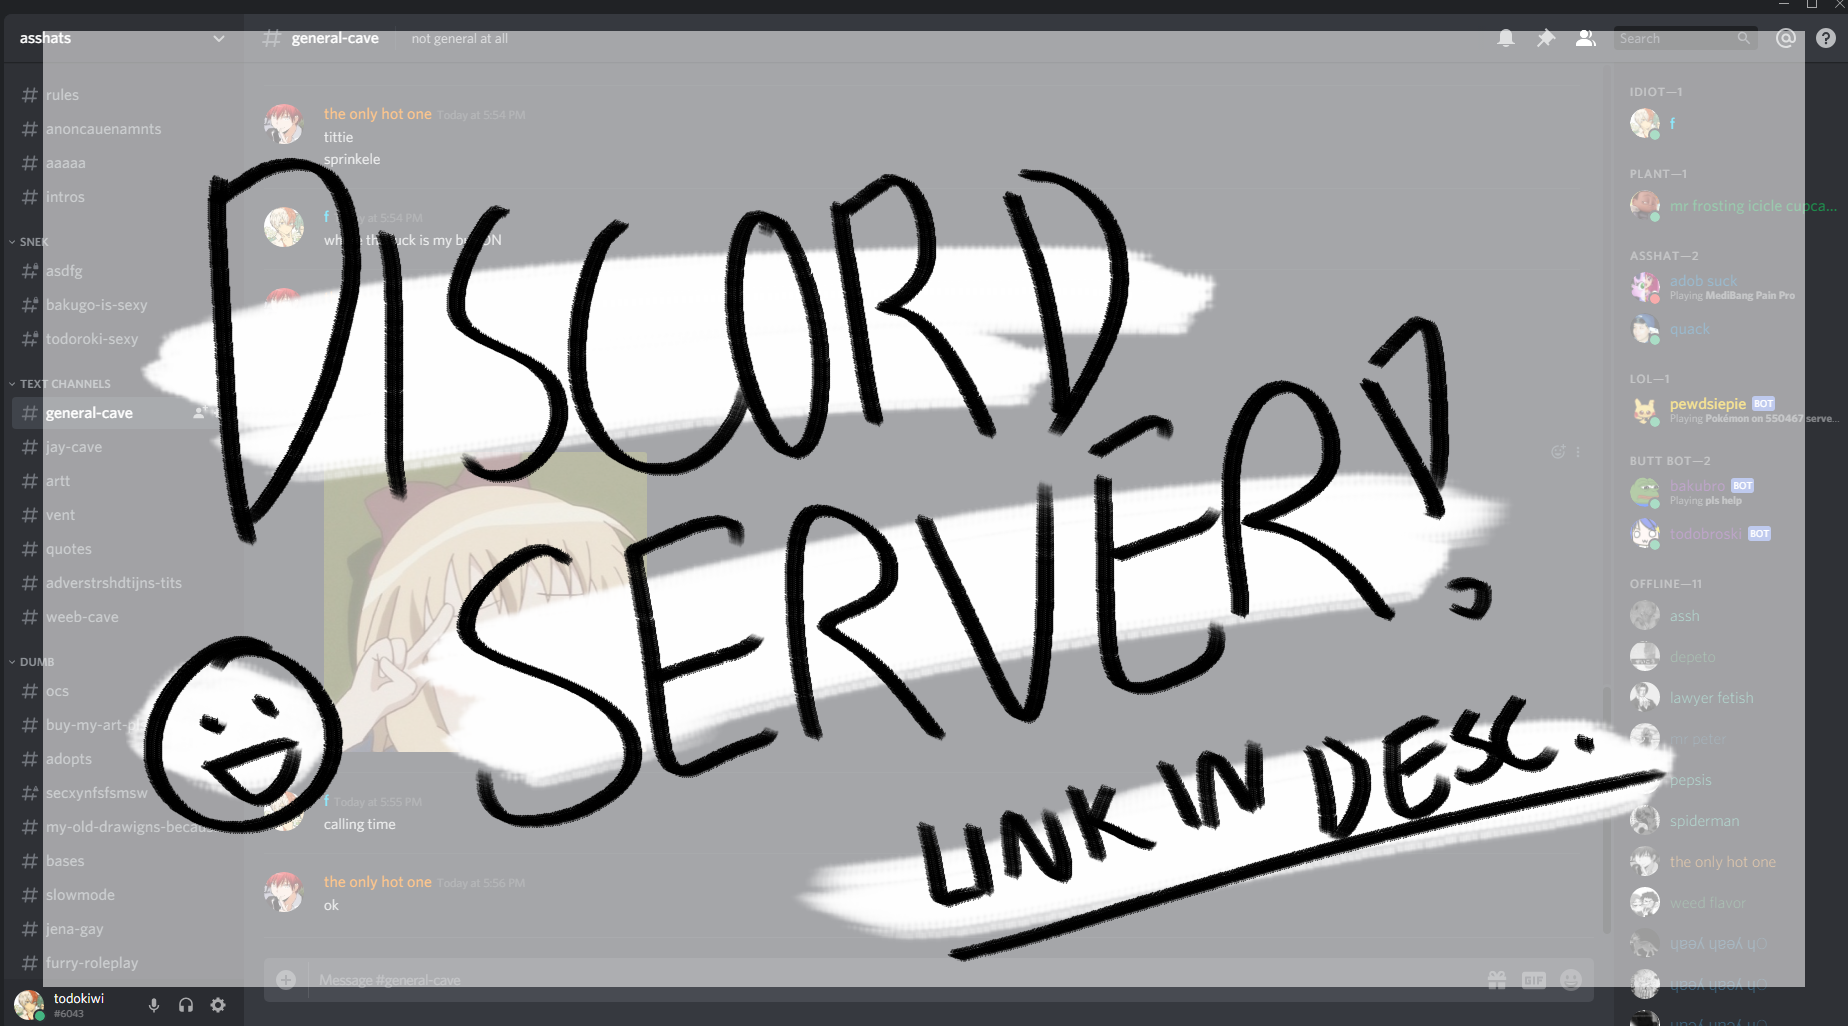 Discord servers to vent